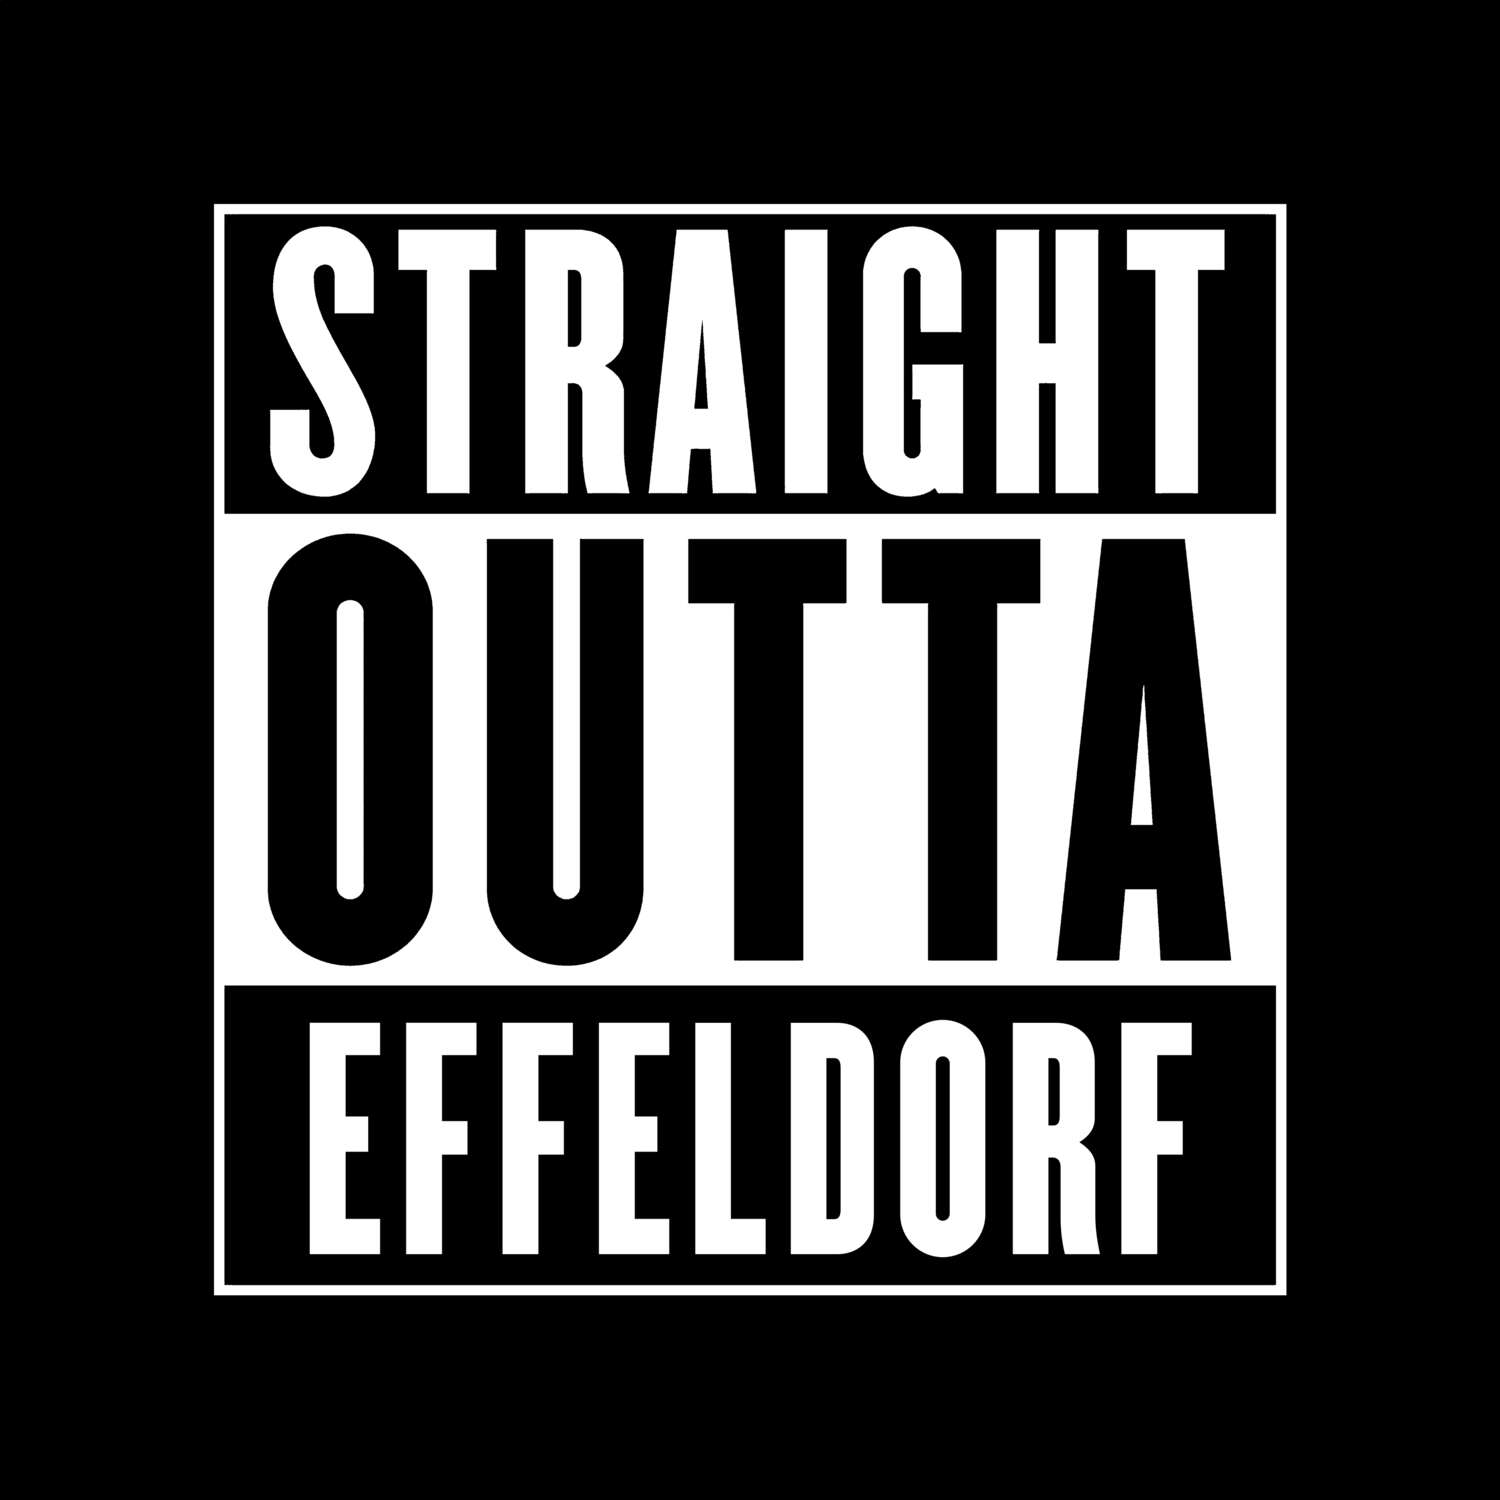 Effeldorf T-Shirt »Straight Outta«